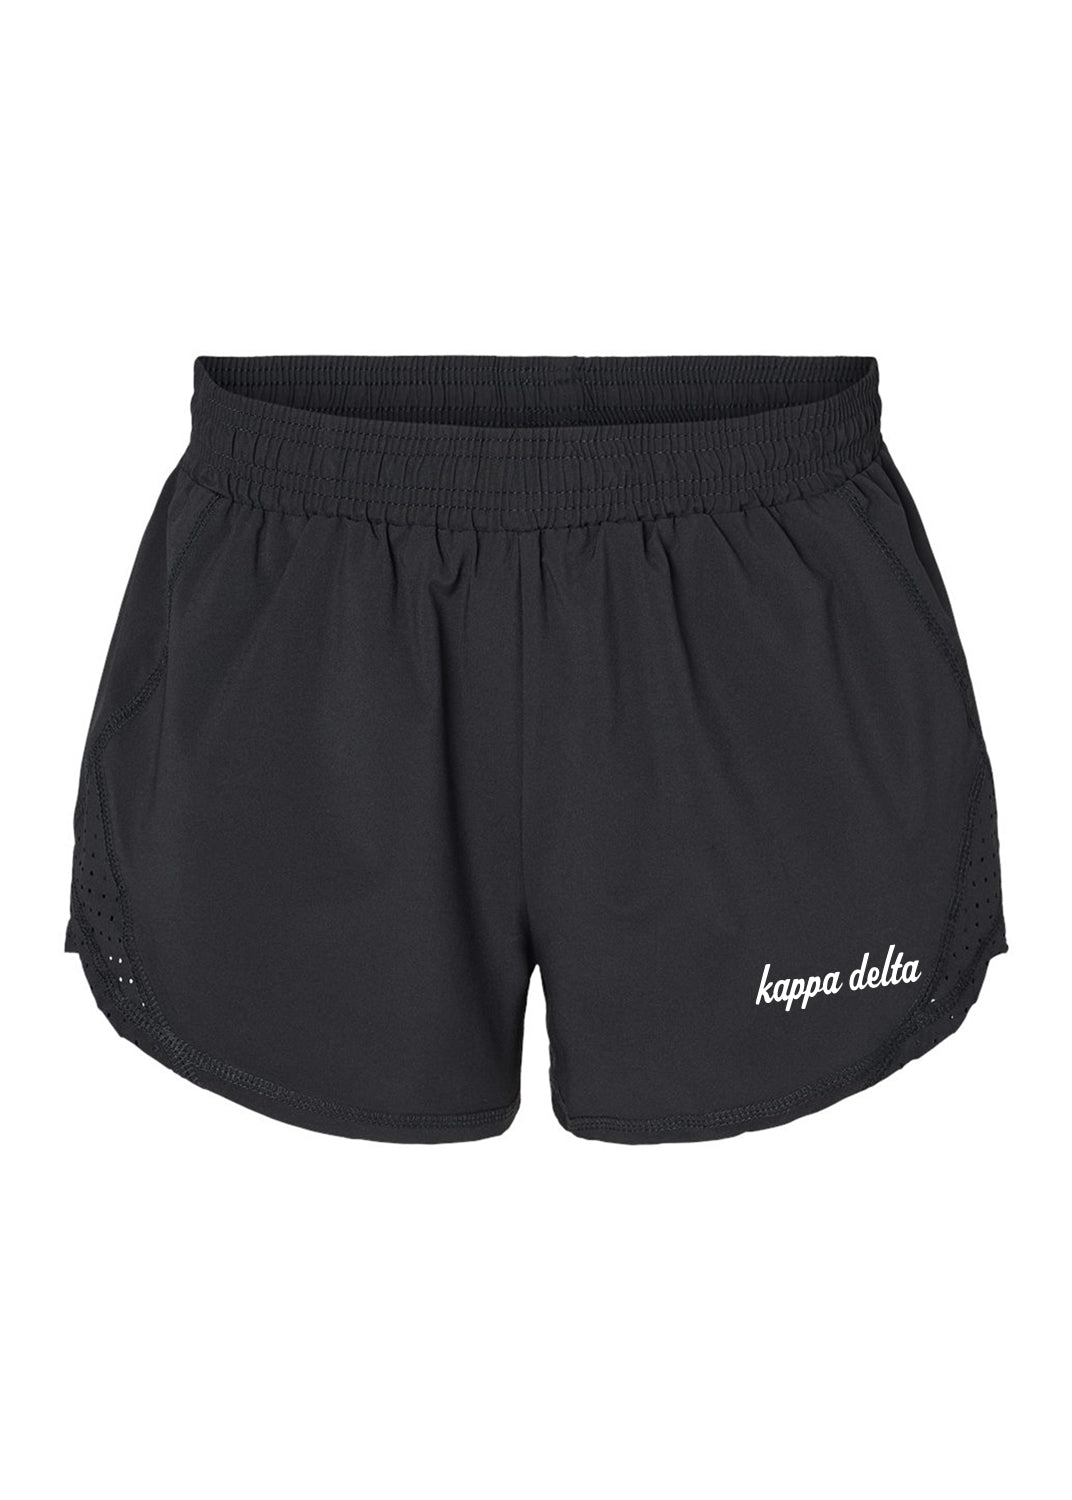 Kappa Delta Black Athletic Shorts